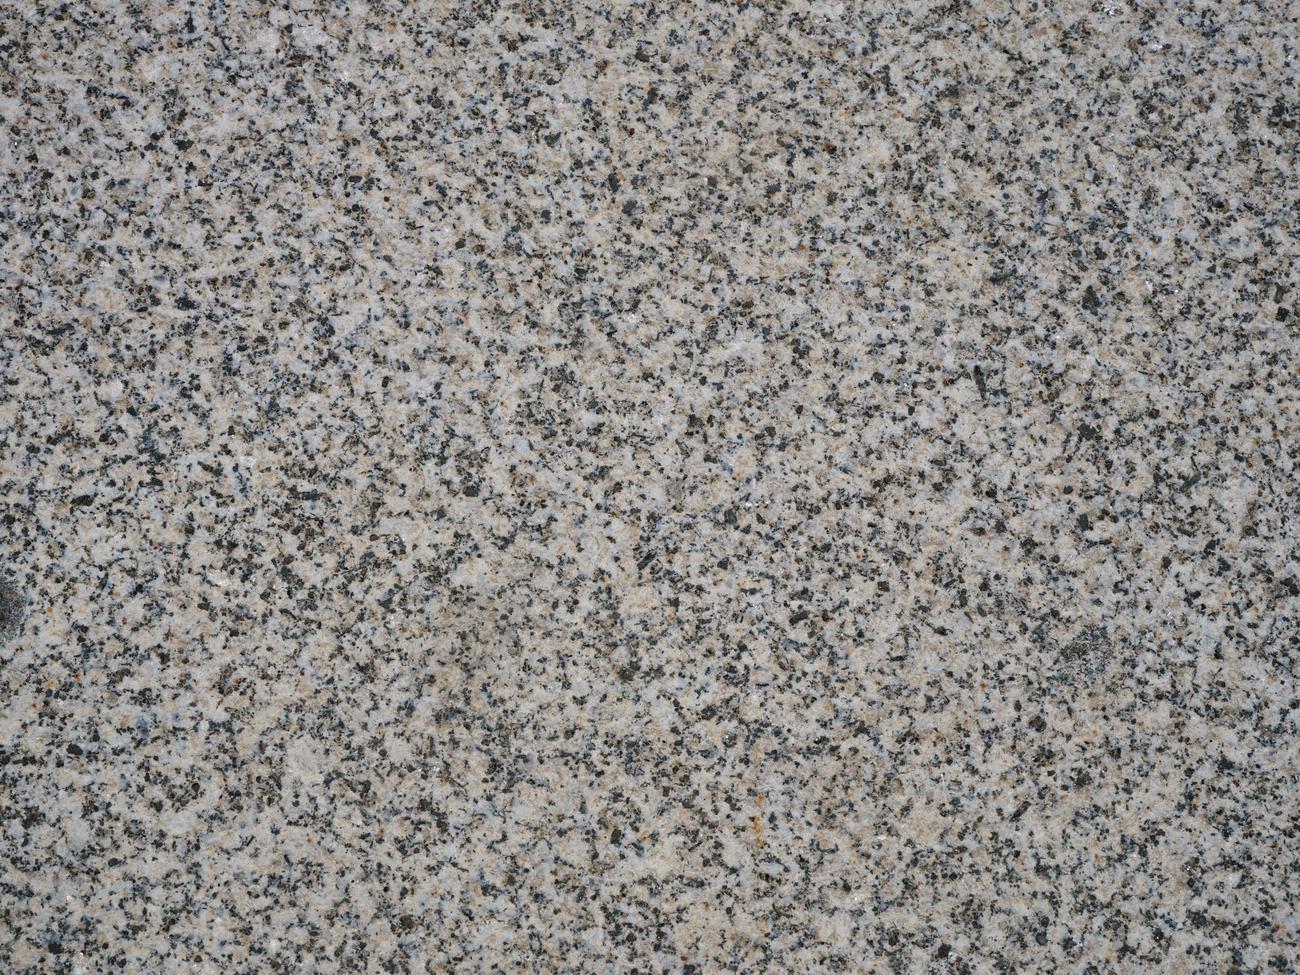 diverse applications of granite